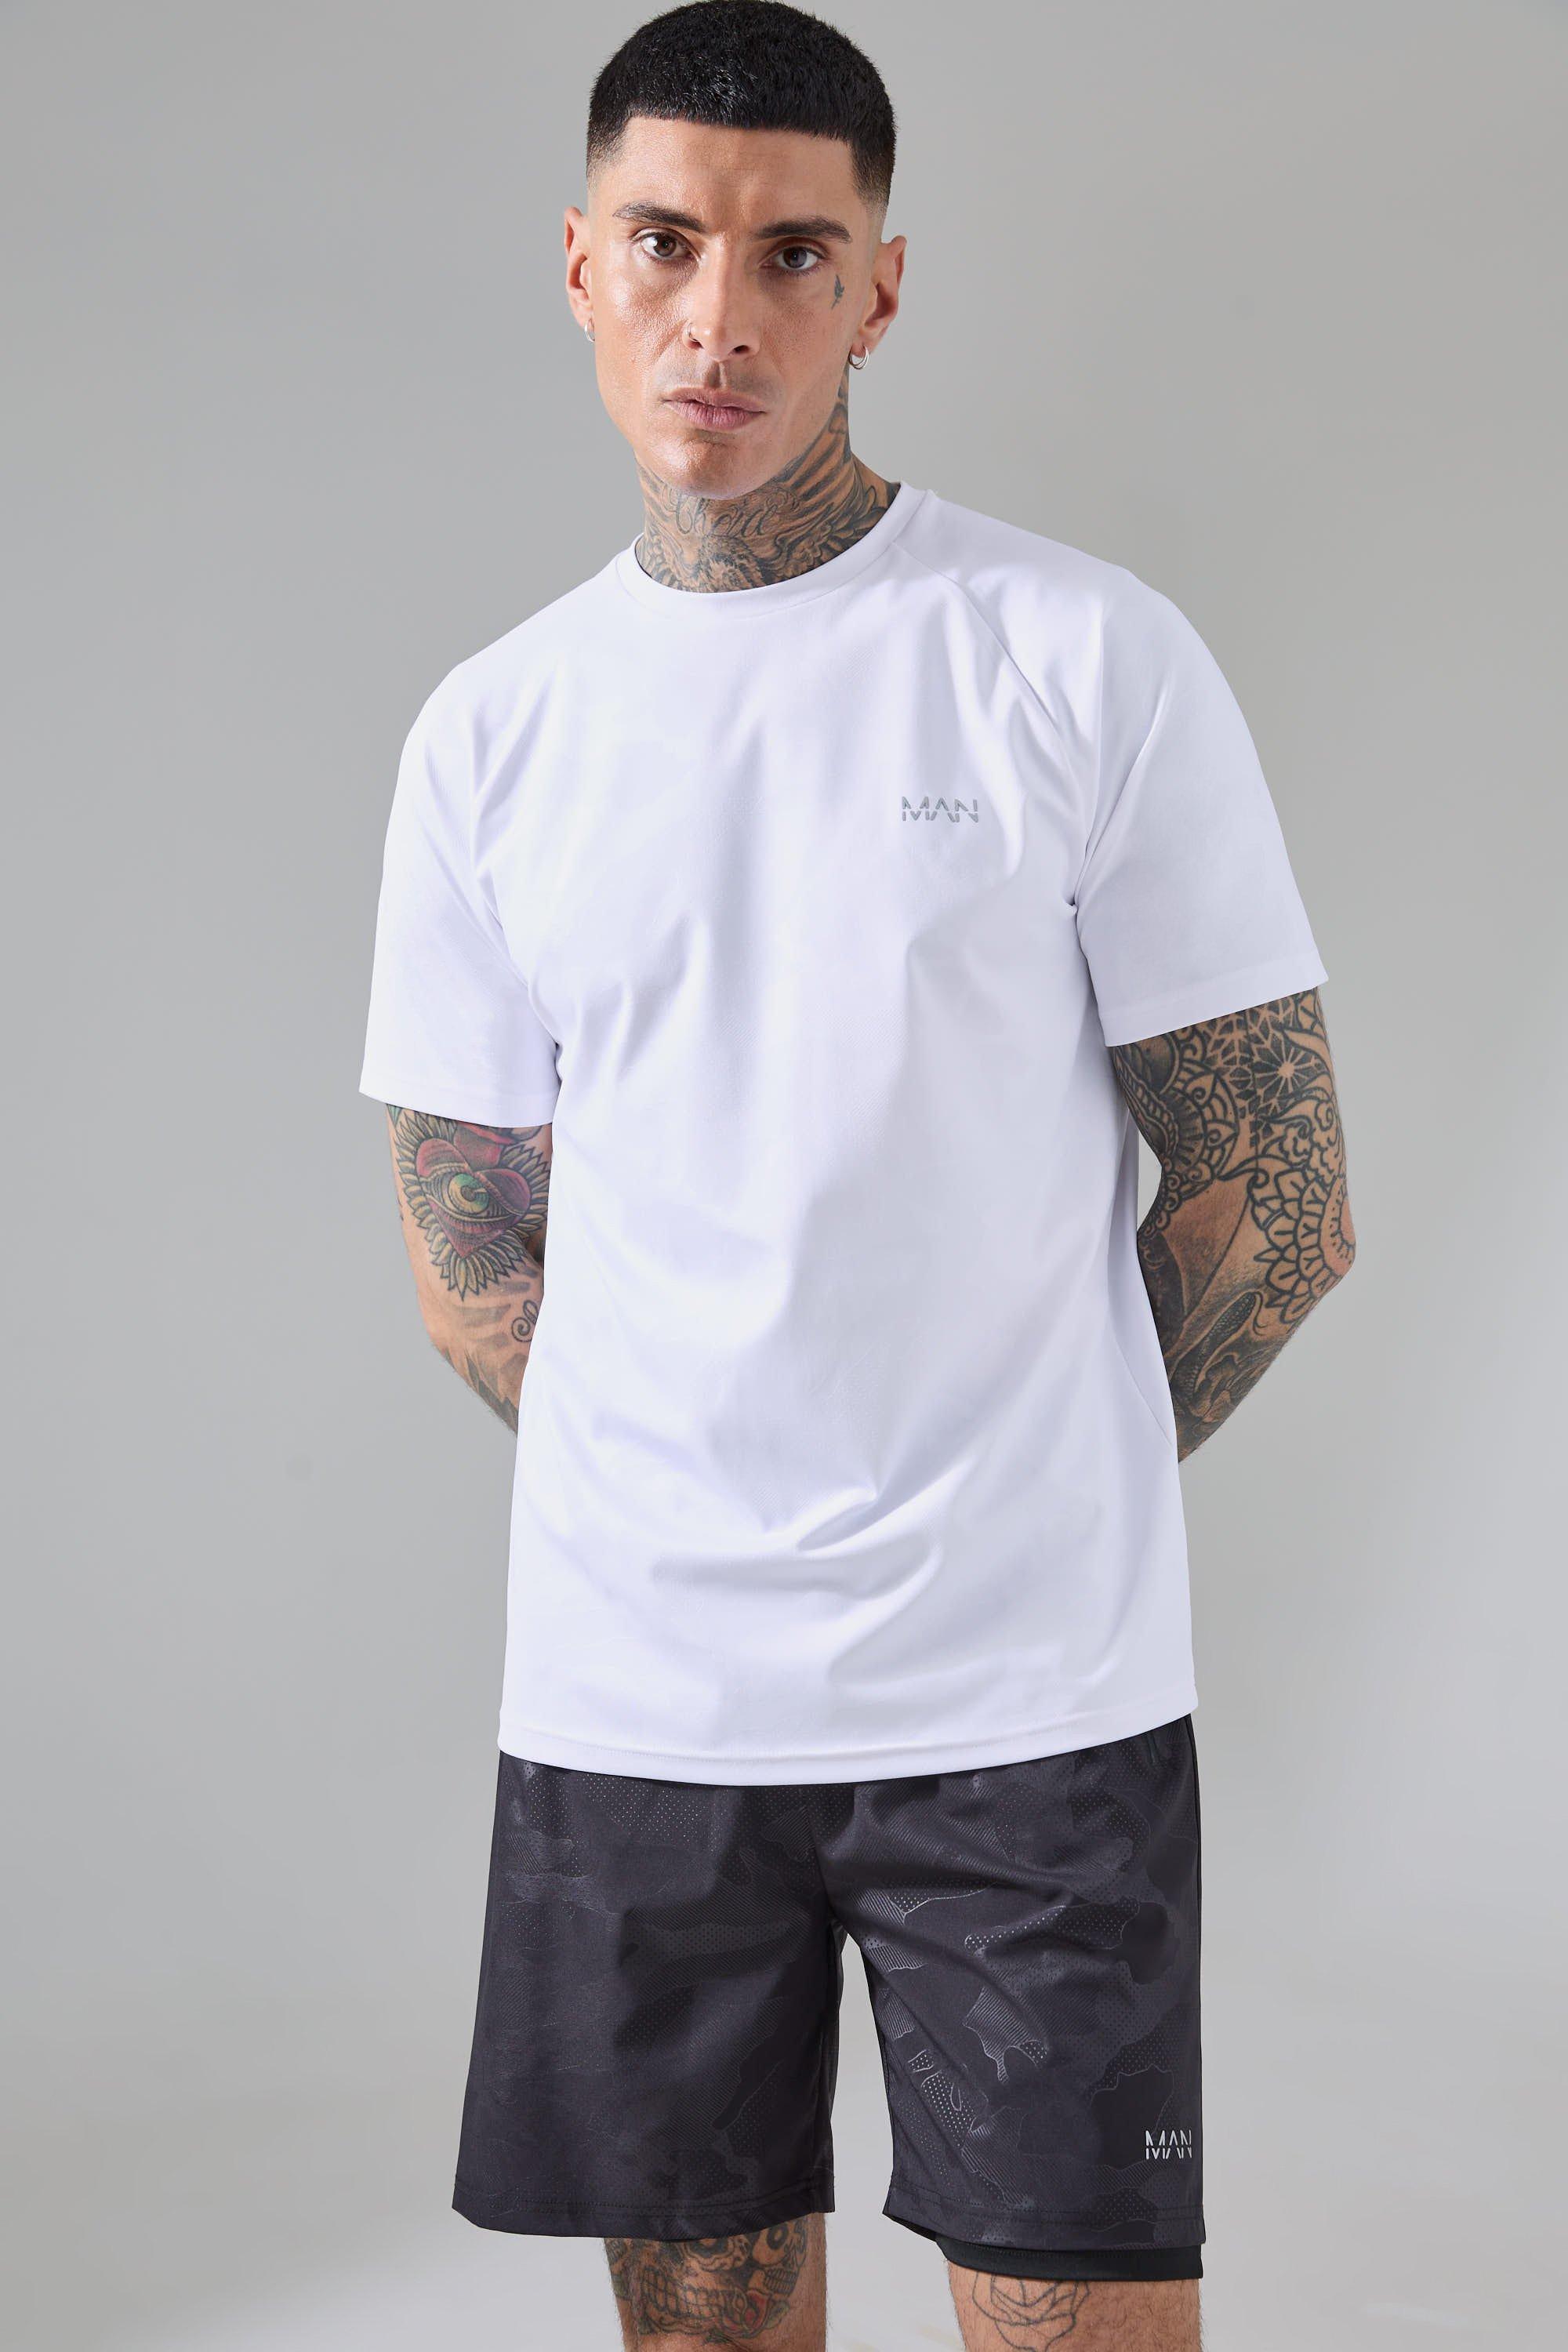 Image of Tall Man Active Camo Raglan Performance T-shirt, Bianco